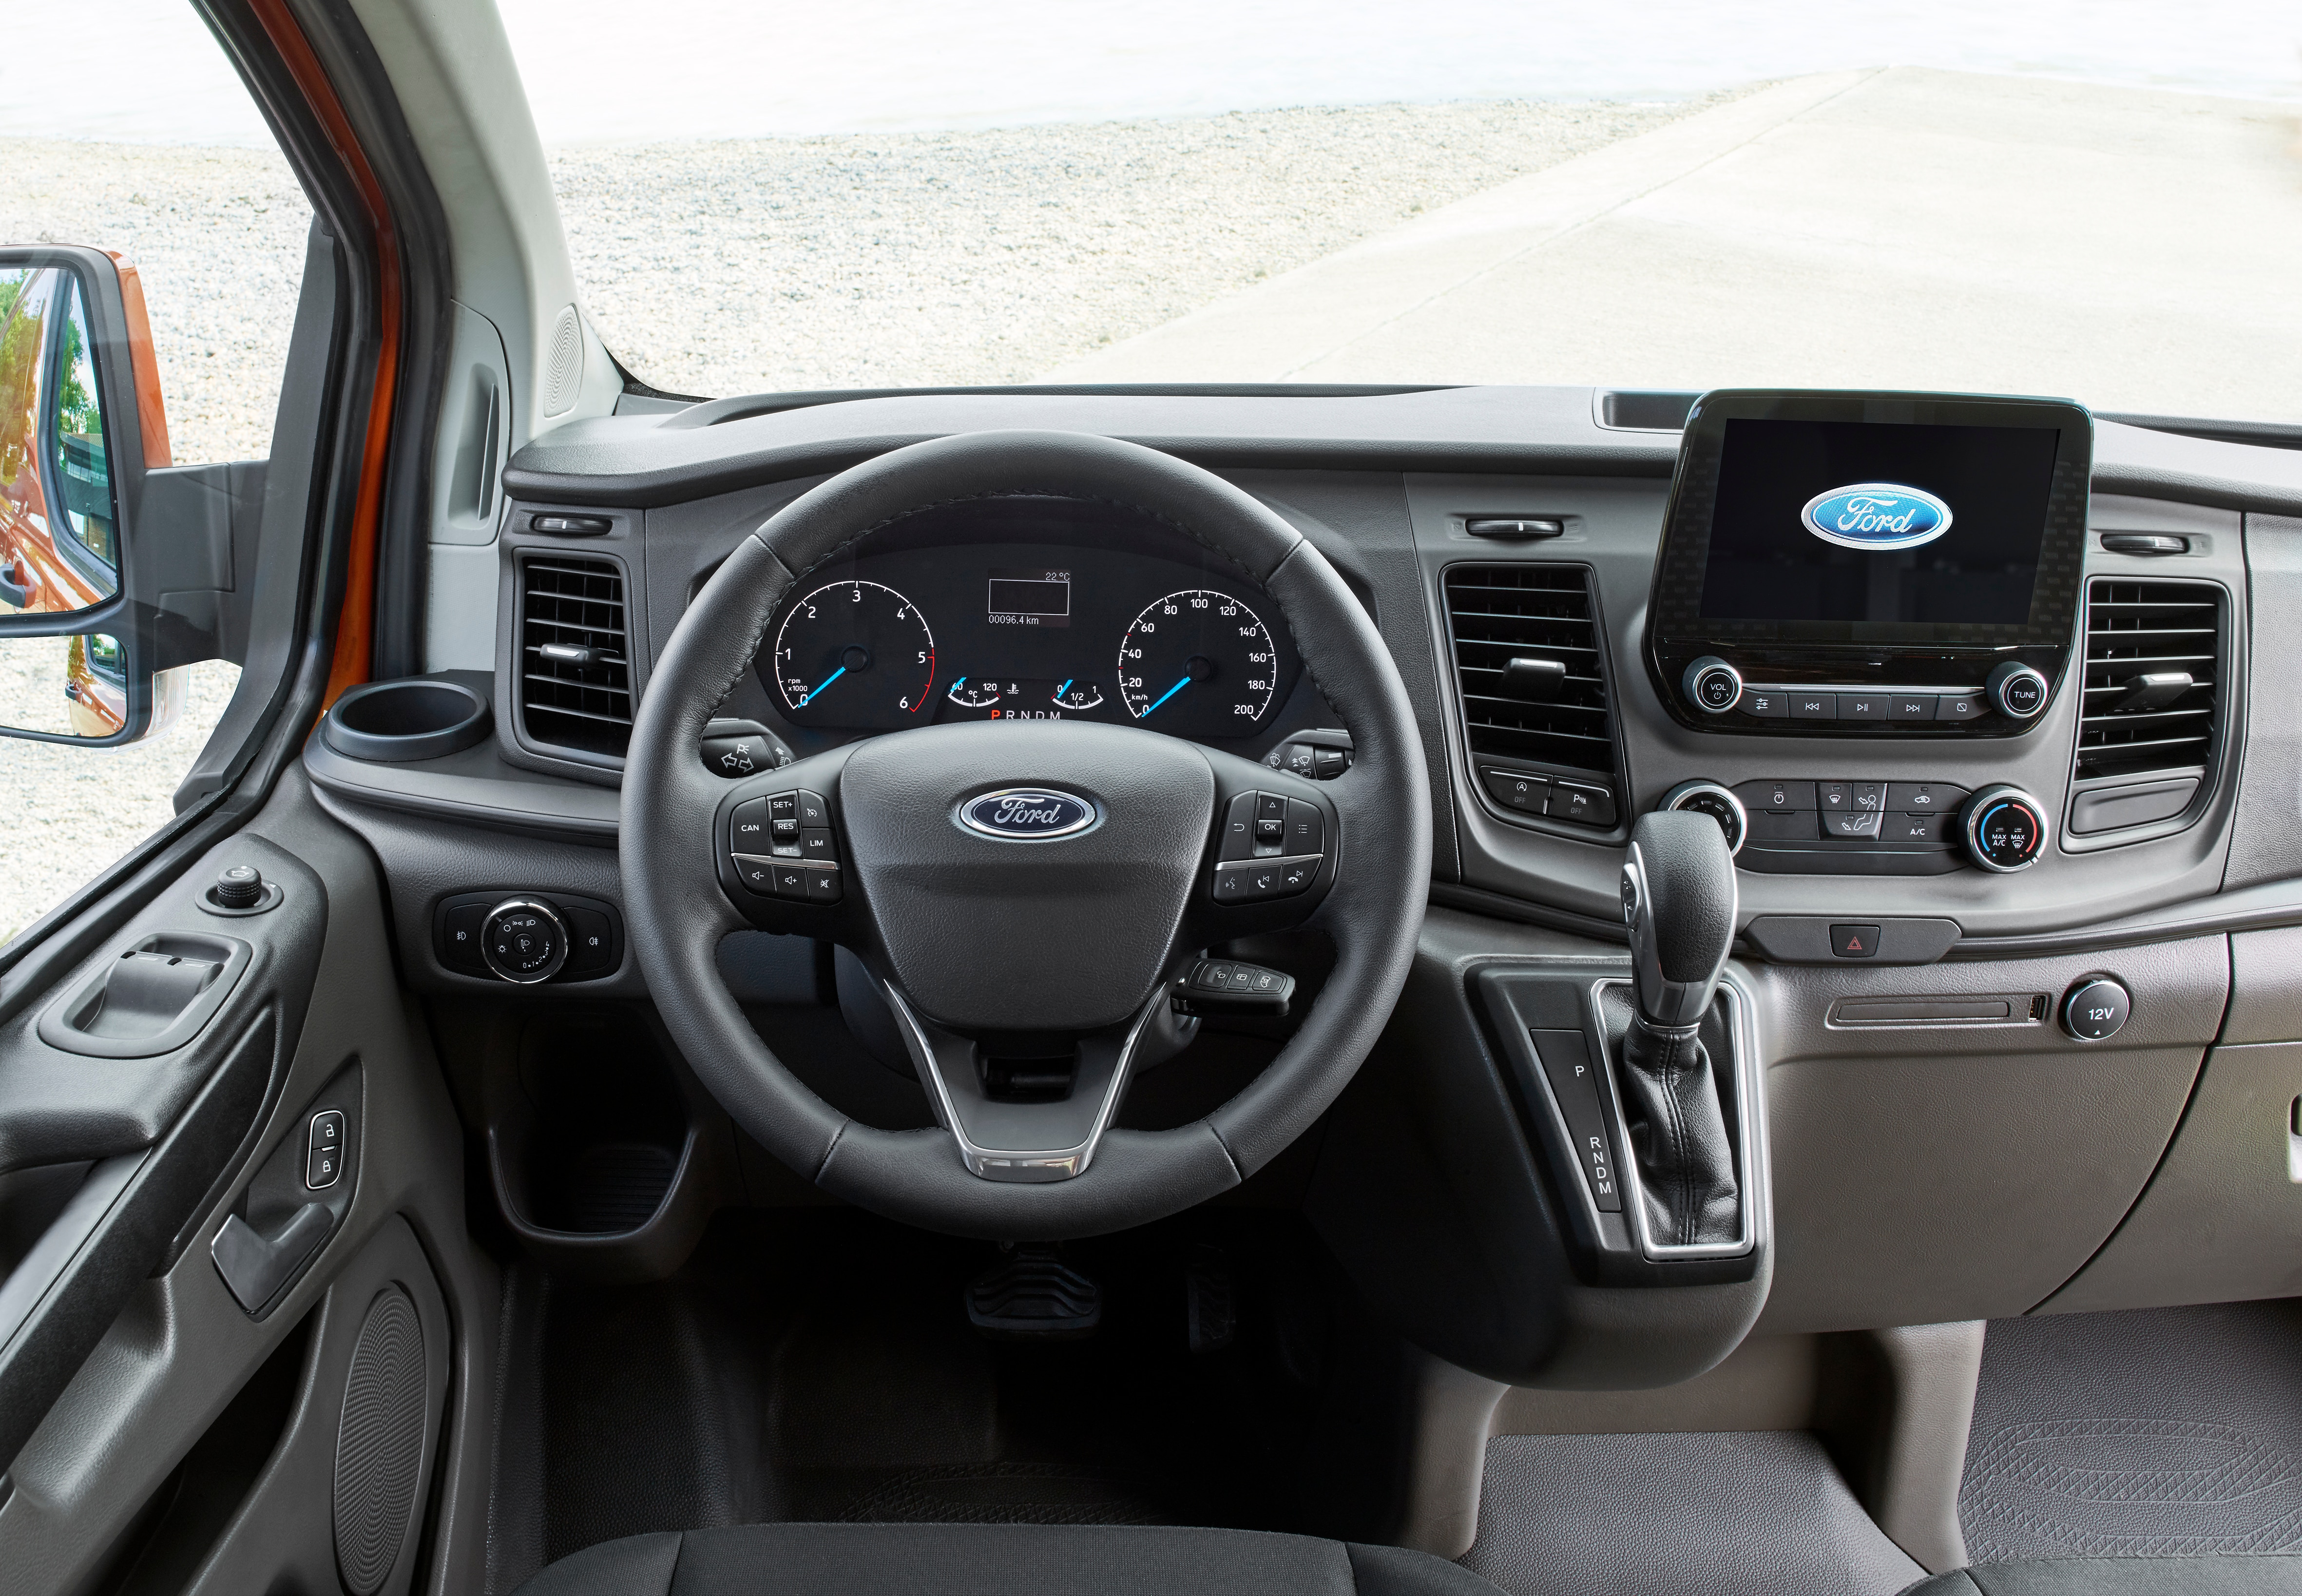 New Ford Transit Custom â Enhanced Style, Productivity and Technology for Europeâs Top-Selling 1 